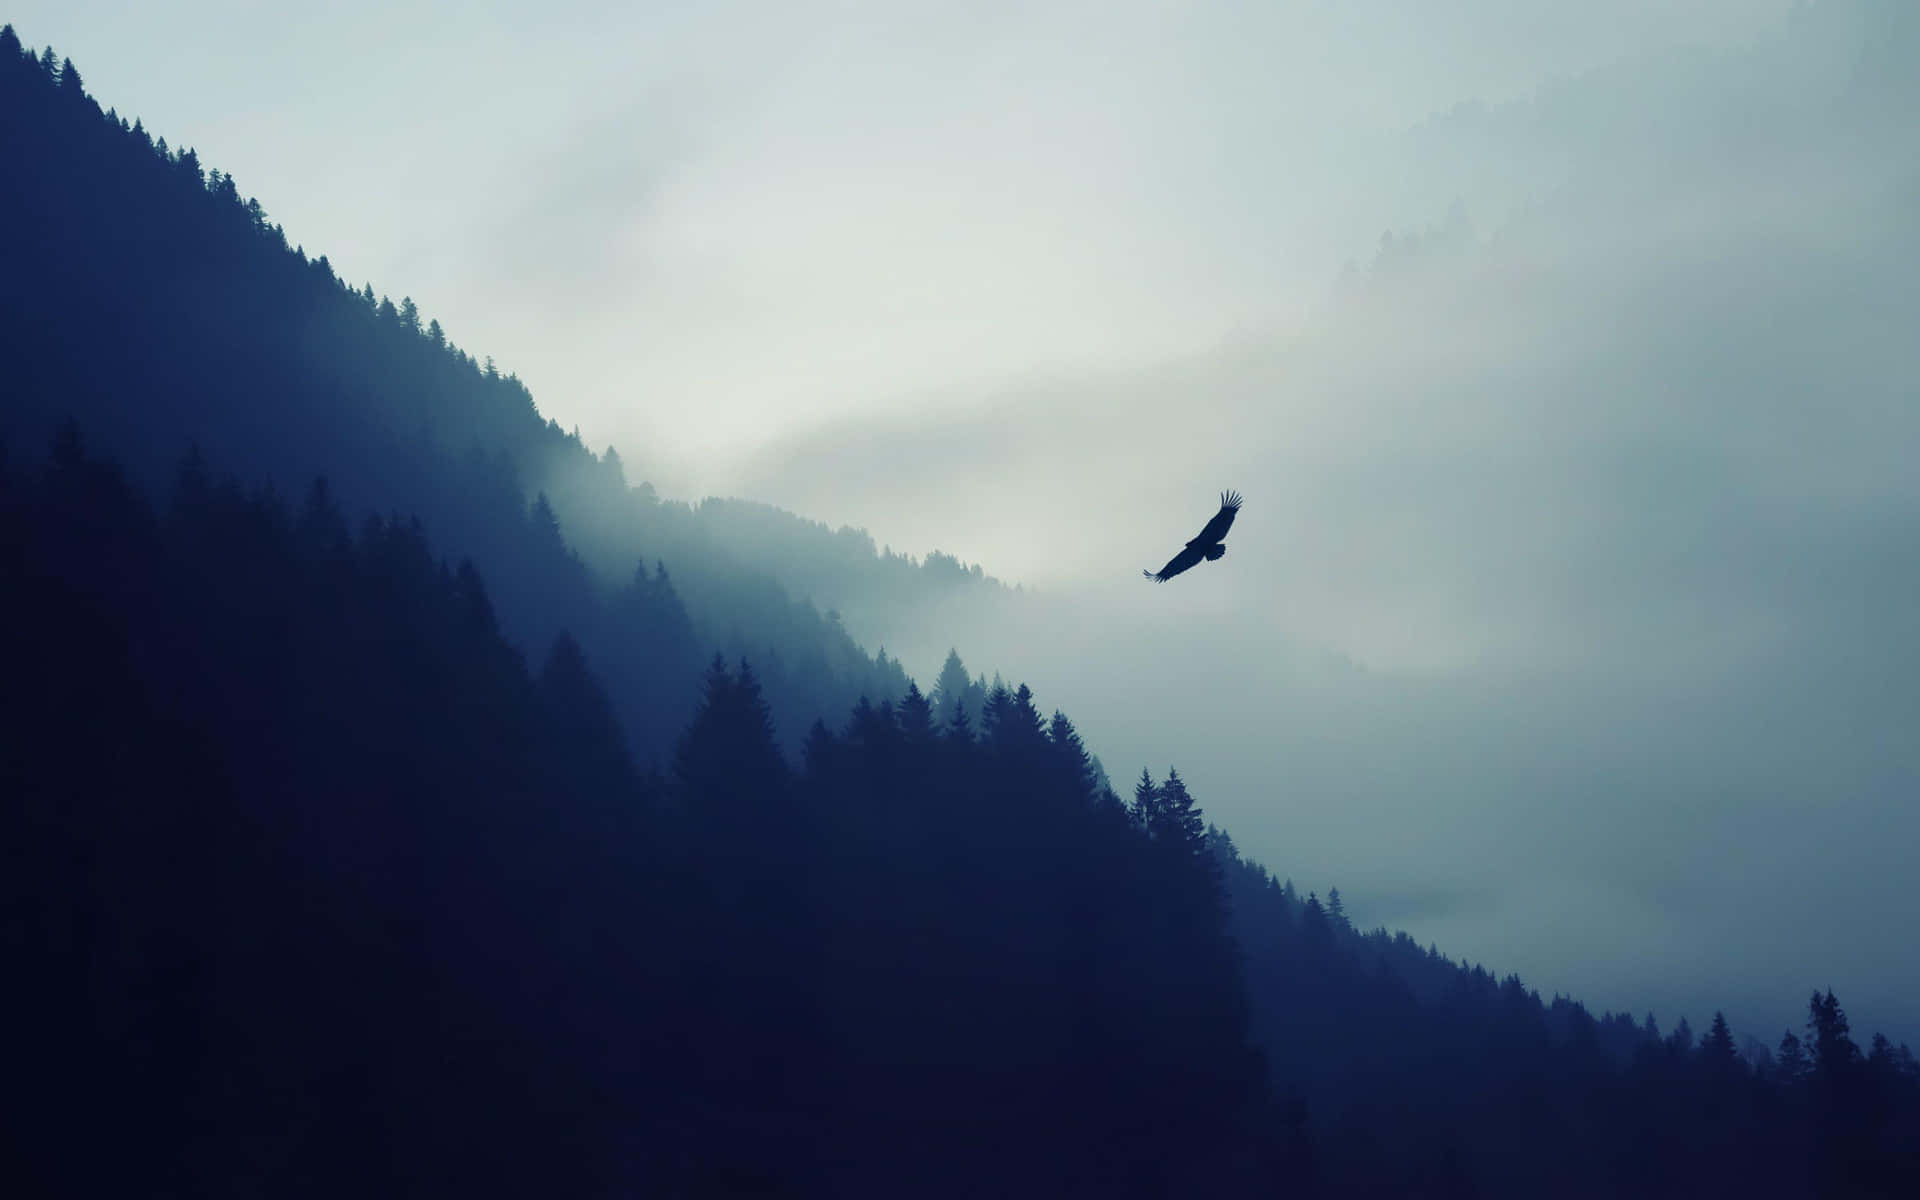 A majestic bald eagle in flight